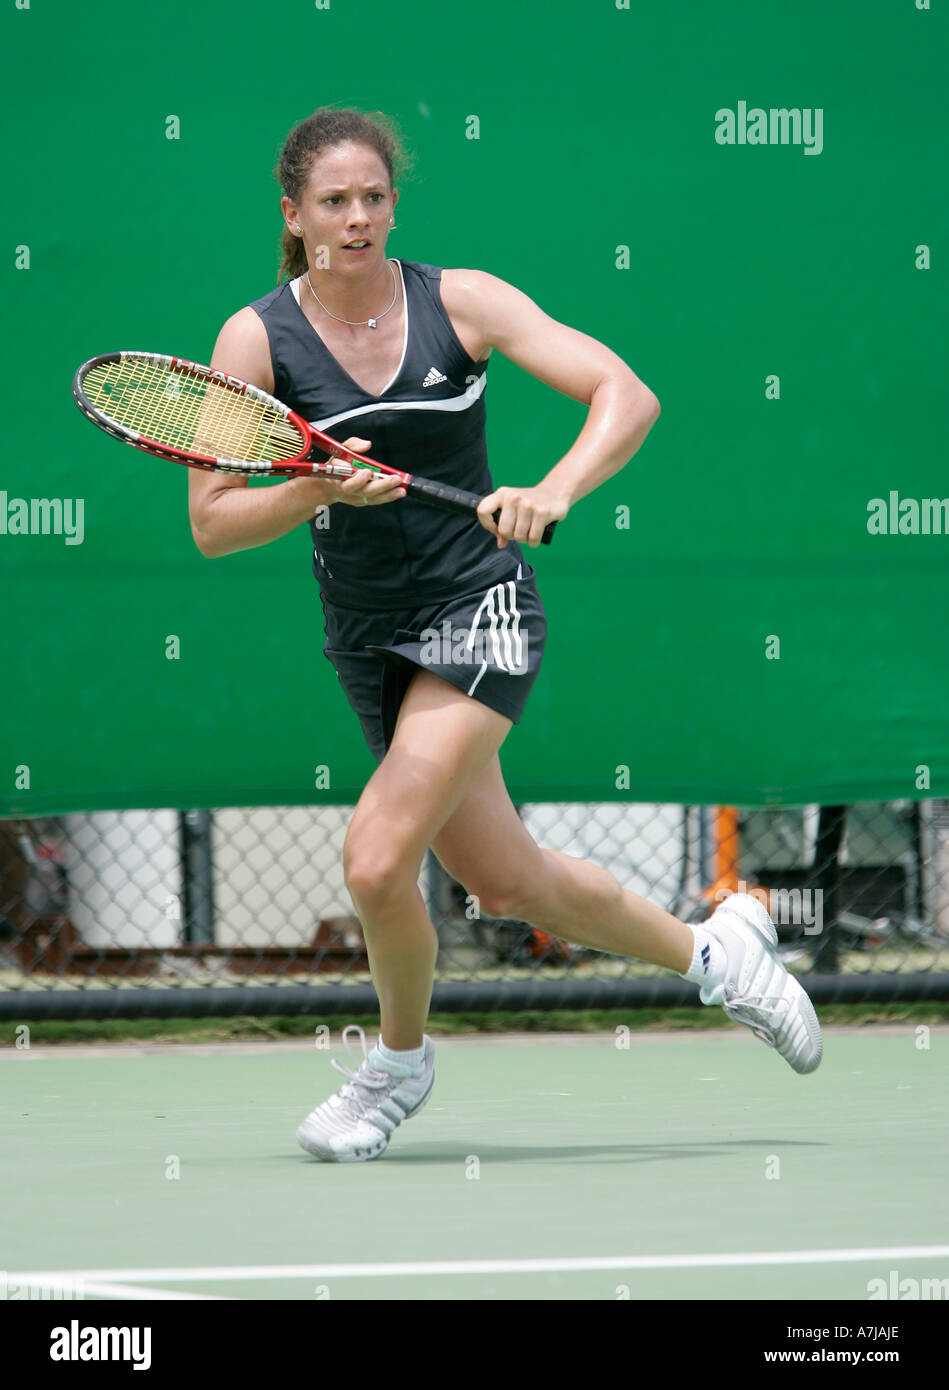 Tennis Pro Patty Schnyder from Switzerland at the Australian Open in  Melbourne / Australia Stock Photo - Alamy